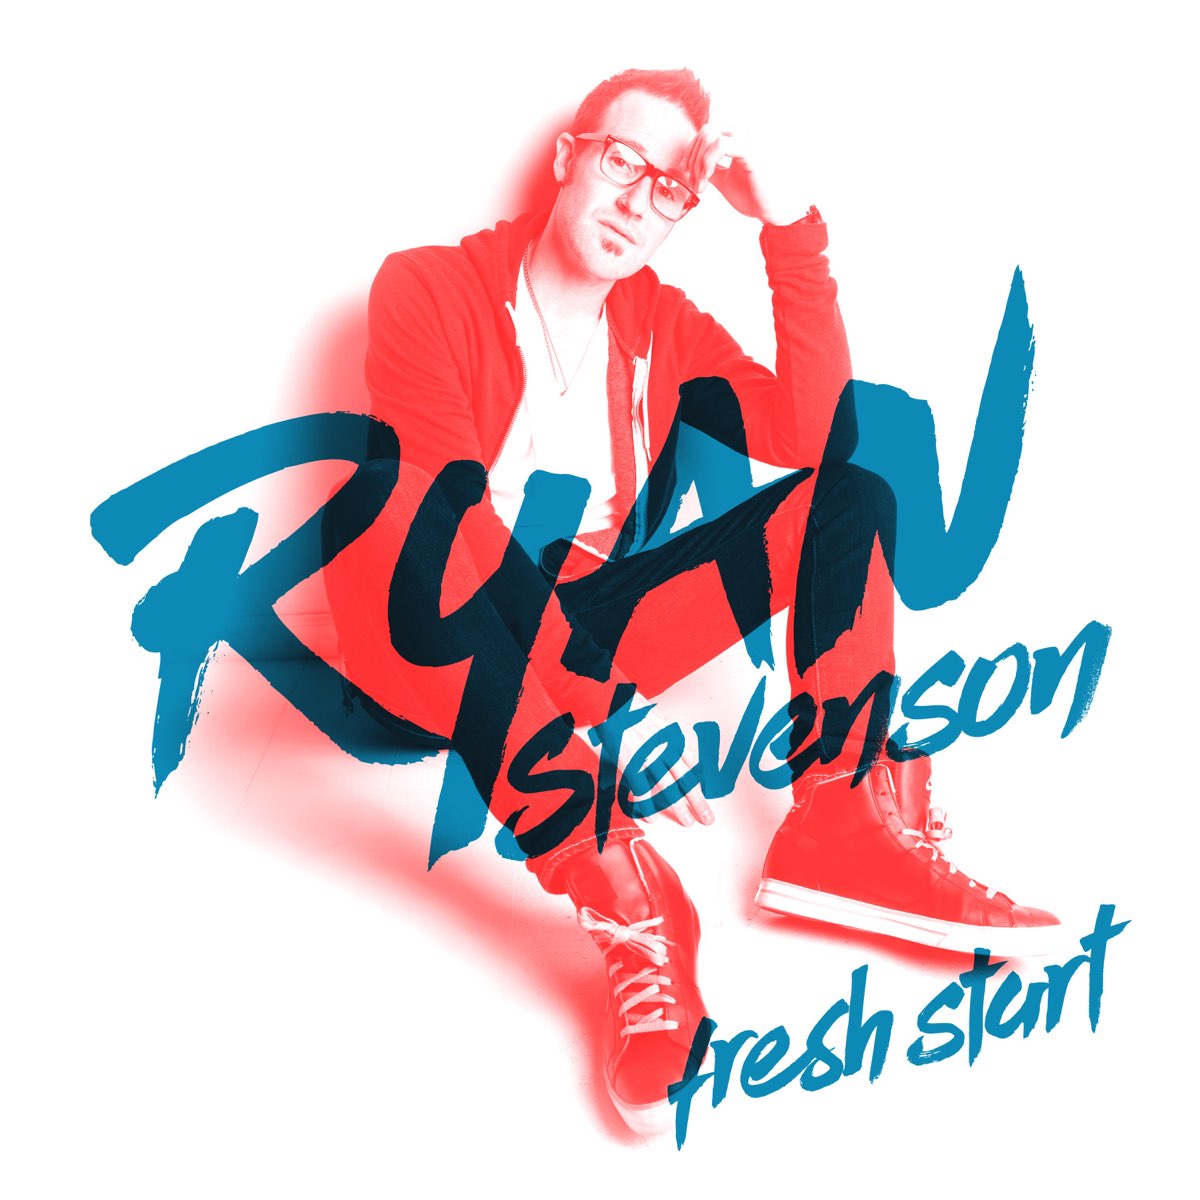 Starting cd. Fresh start музыка. Ryan a. "Trust me". Fresh Tunes album Covers 500x500.